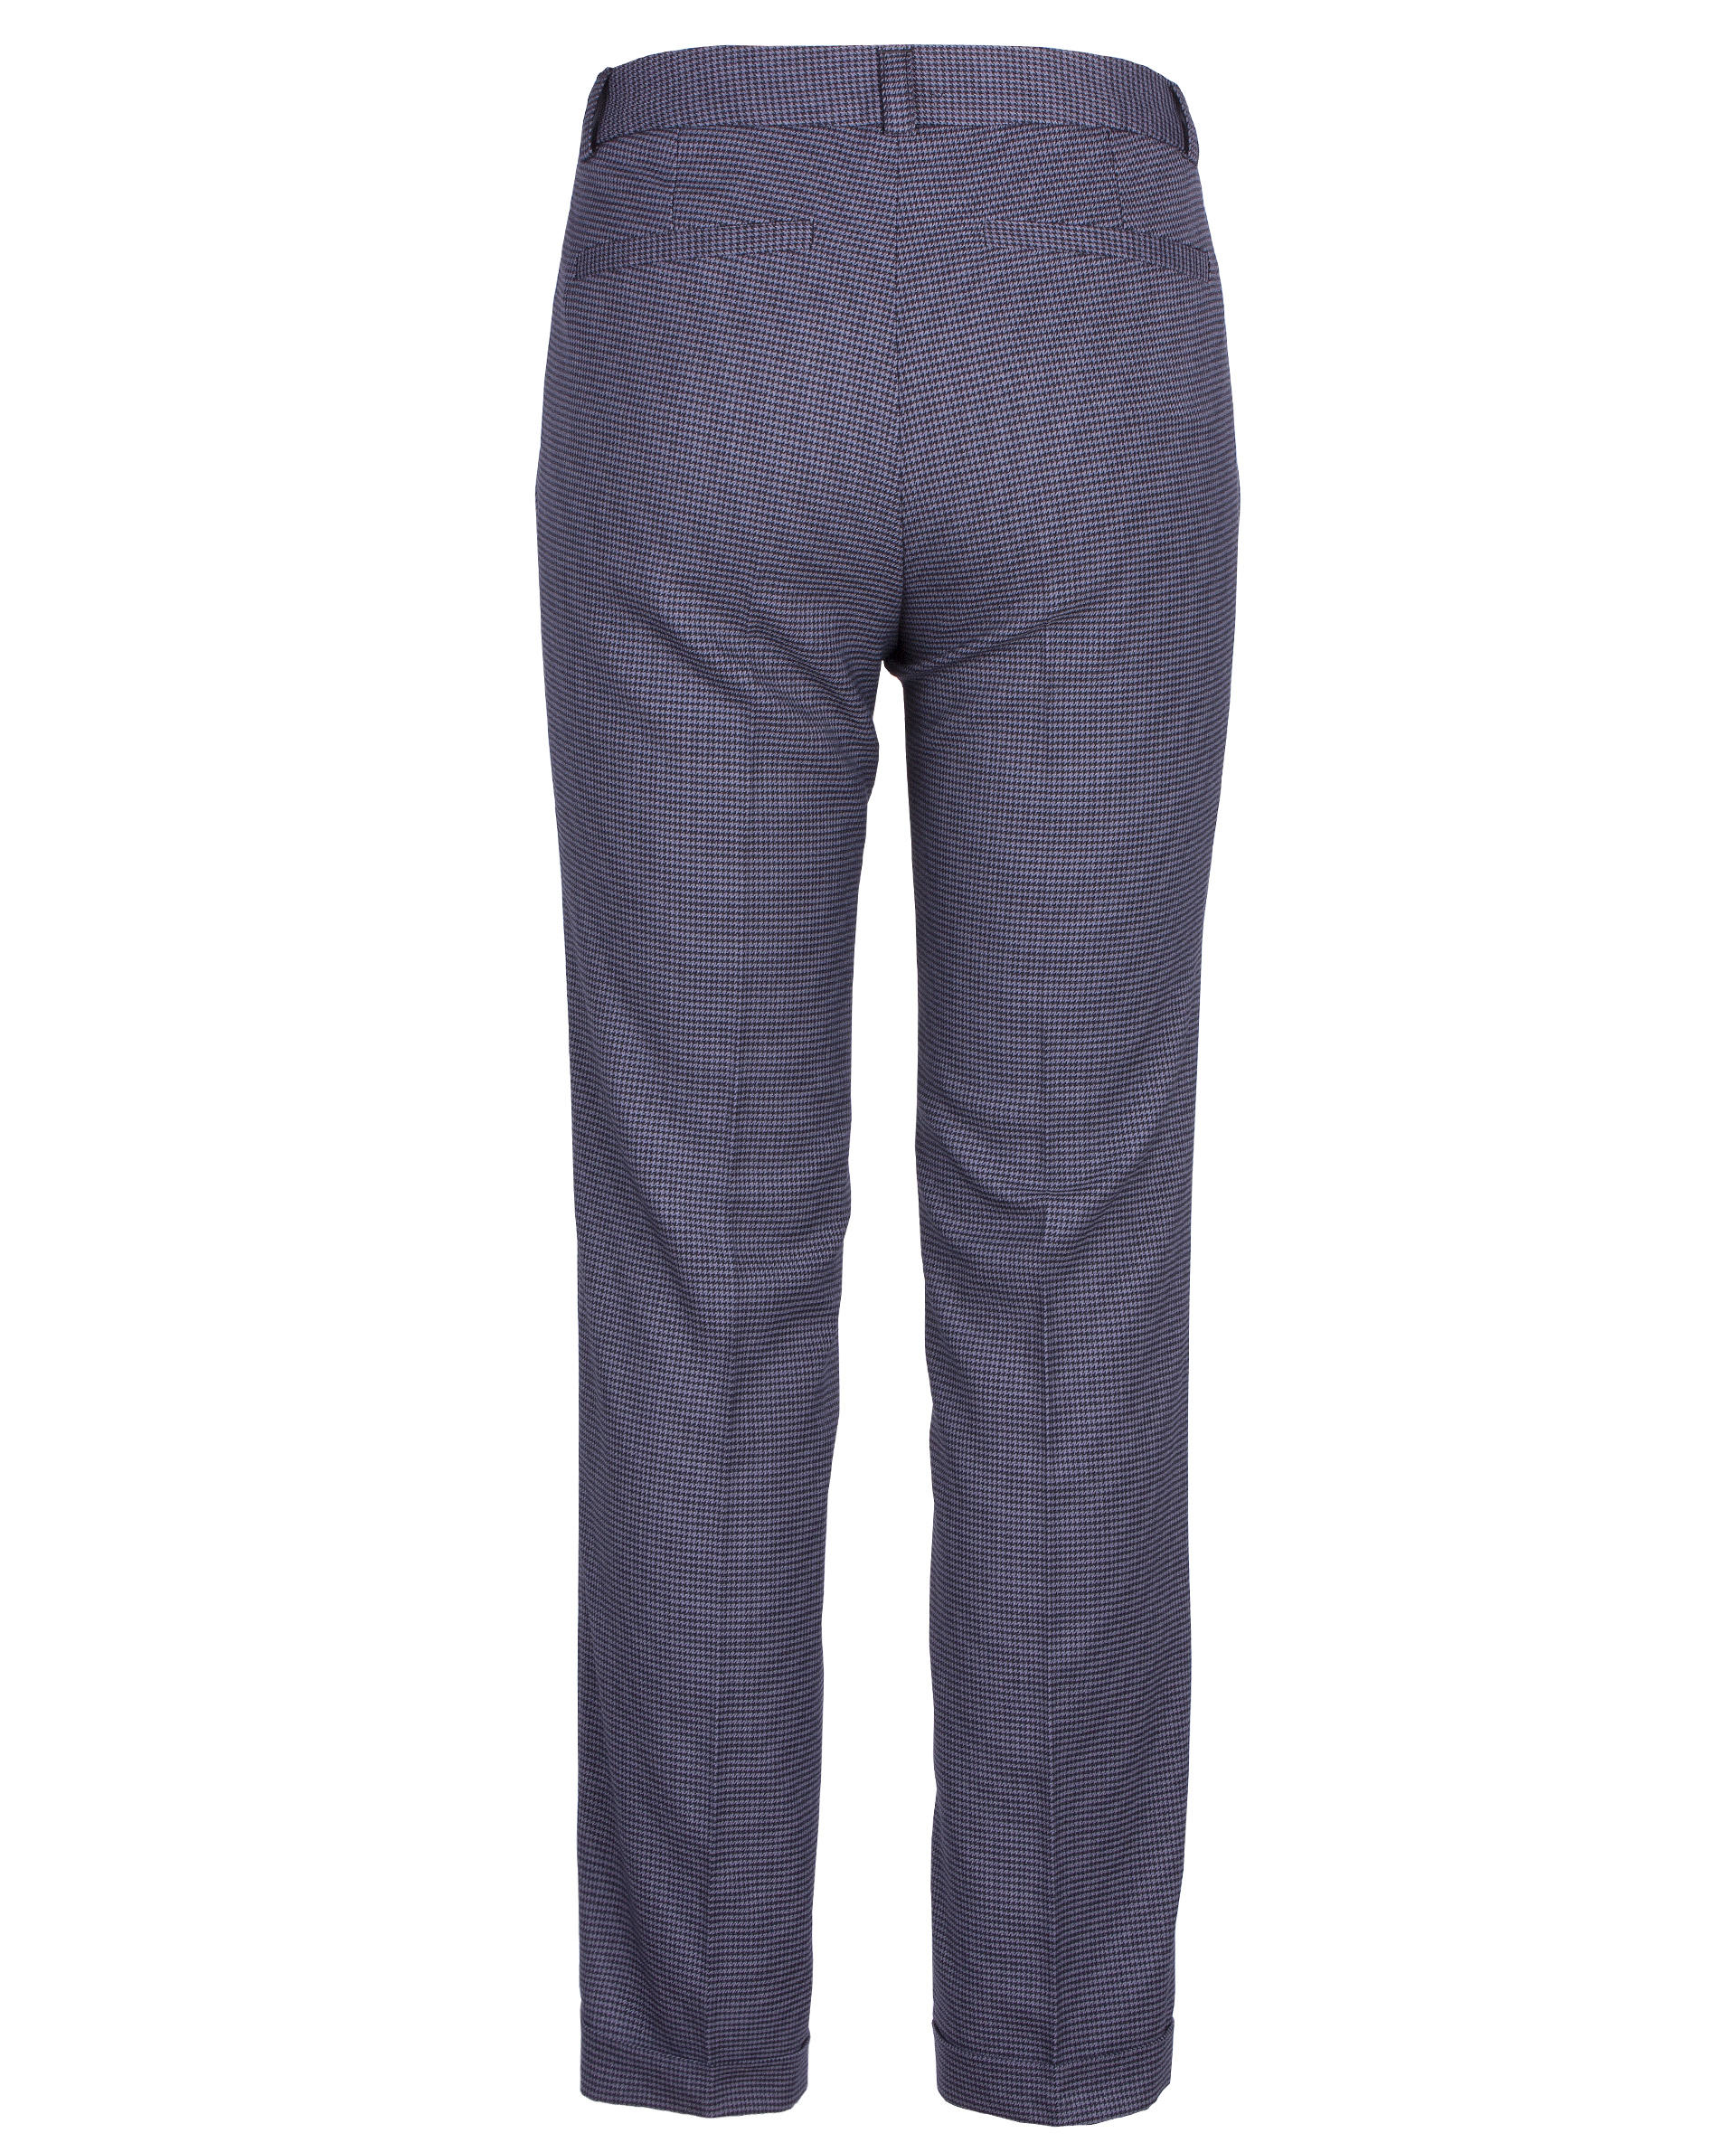 Серые брюки Gulliver 218GSGC6307, размер 170, цвет серый - фото 2